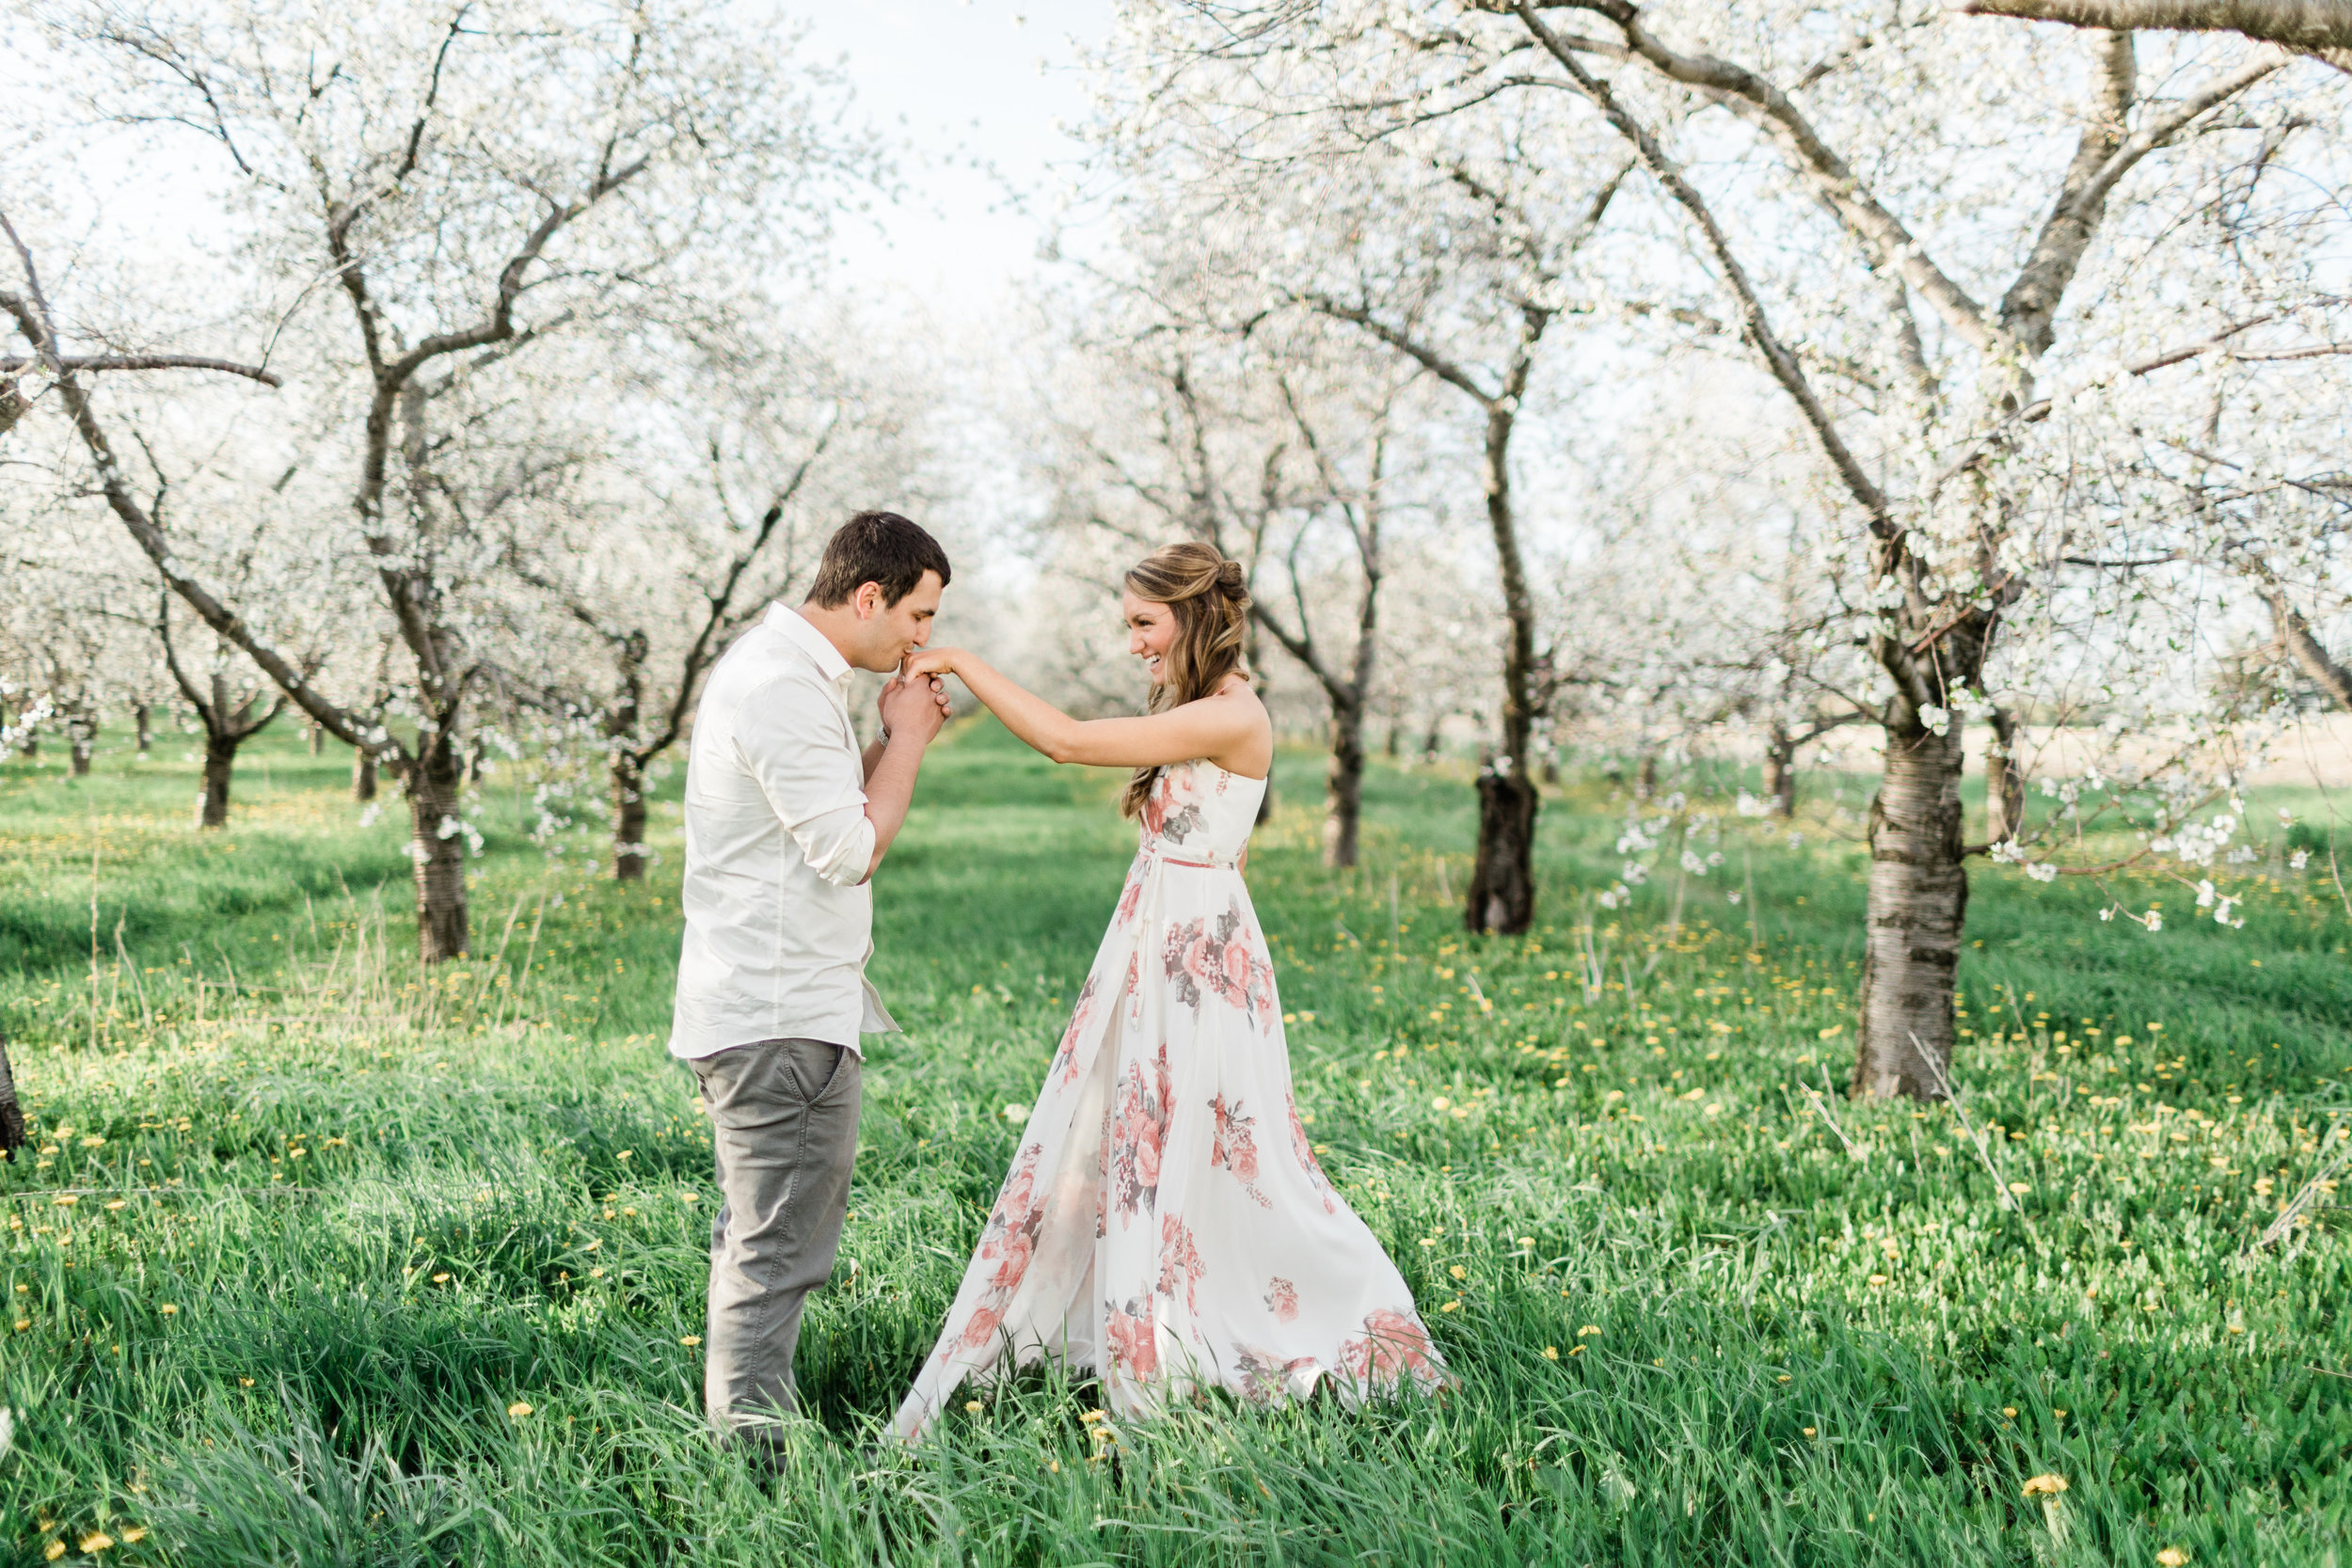 Gorgeous Garden Engagement Photos - The Overwhelmed Bride Wedding Blog